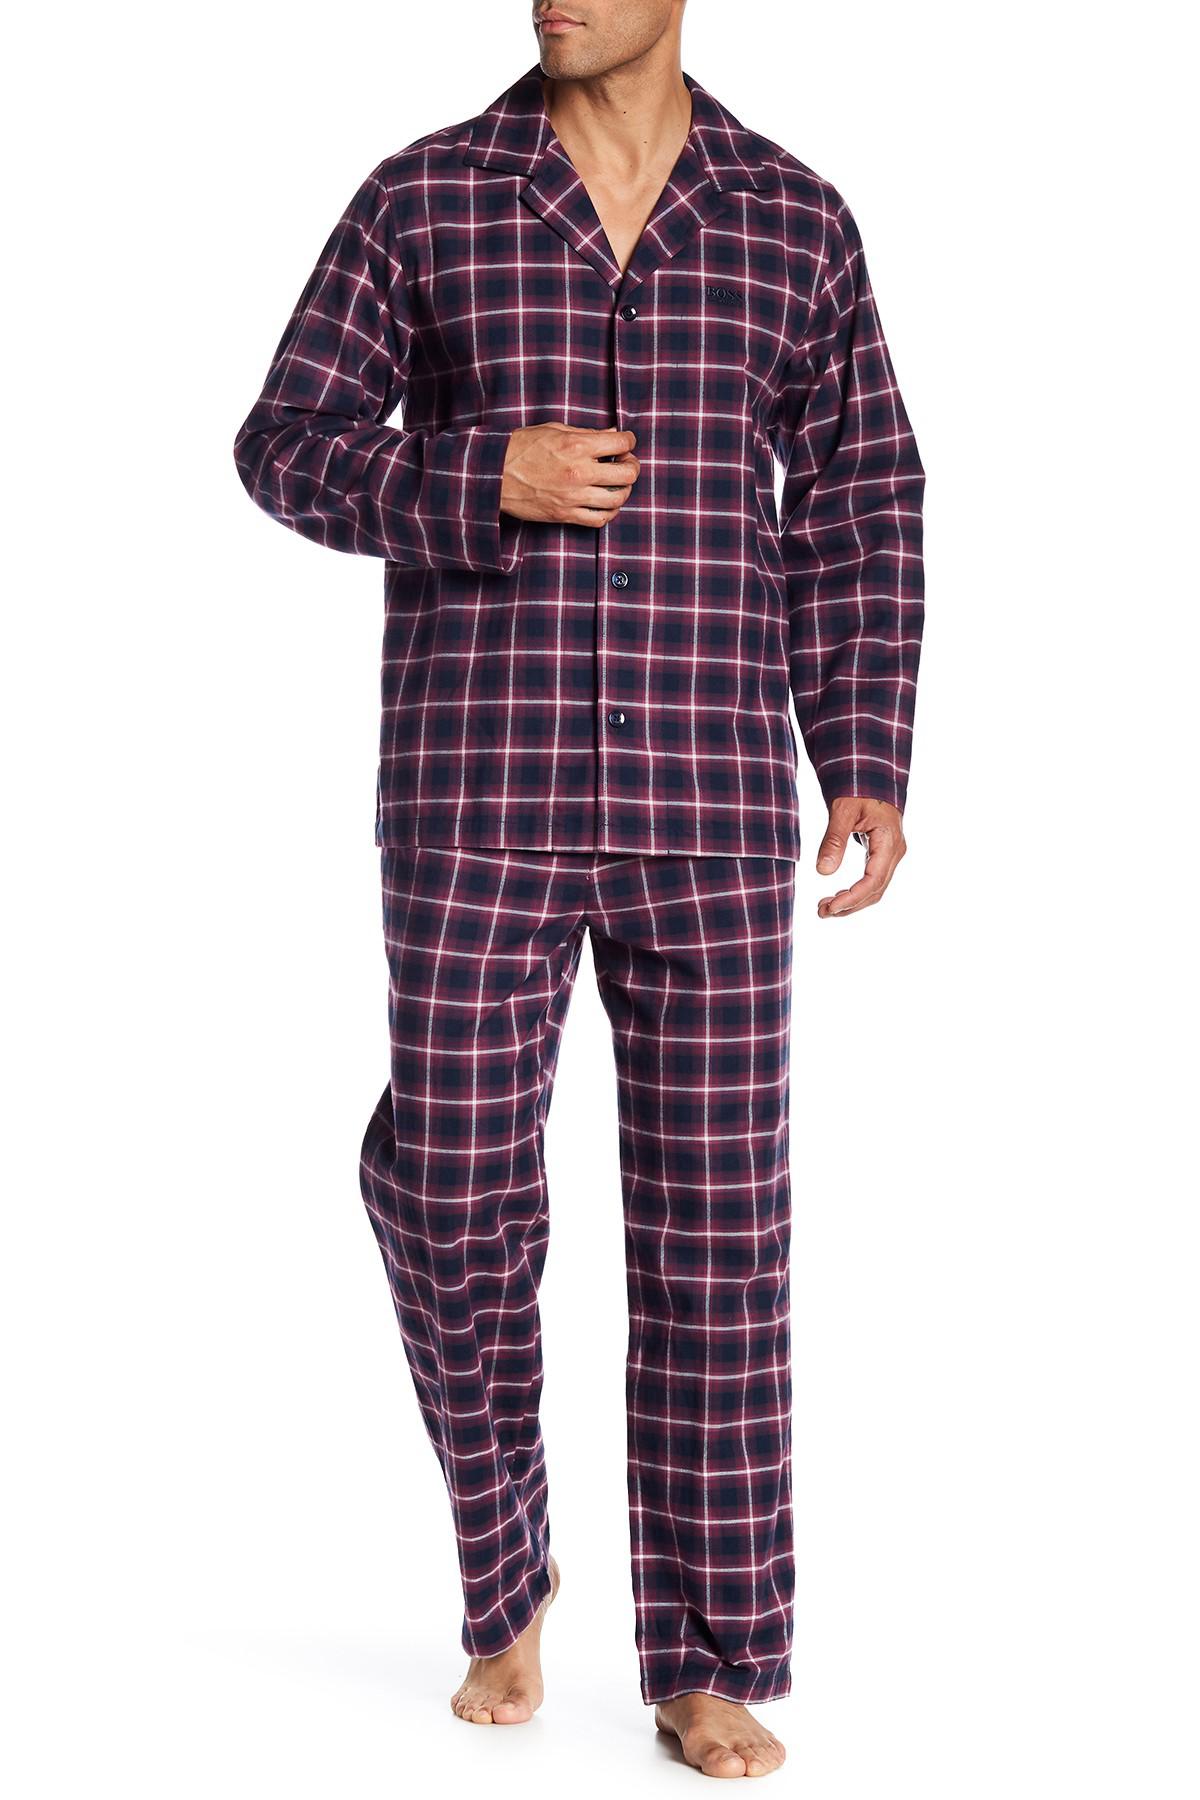 BOSS Cotton Plaid Pajama 2-piece Set in Blue for Men - Lyst